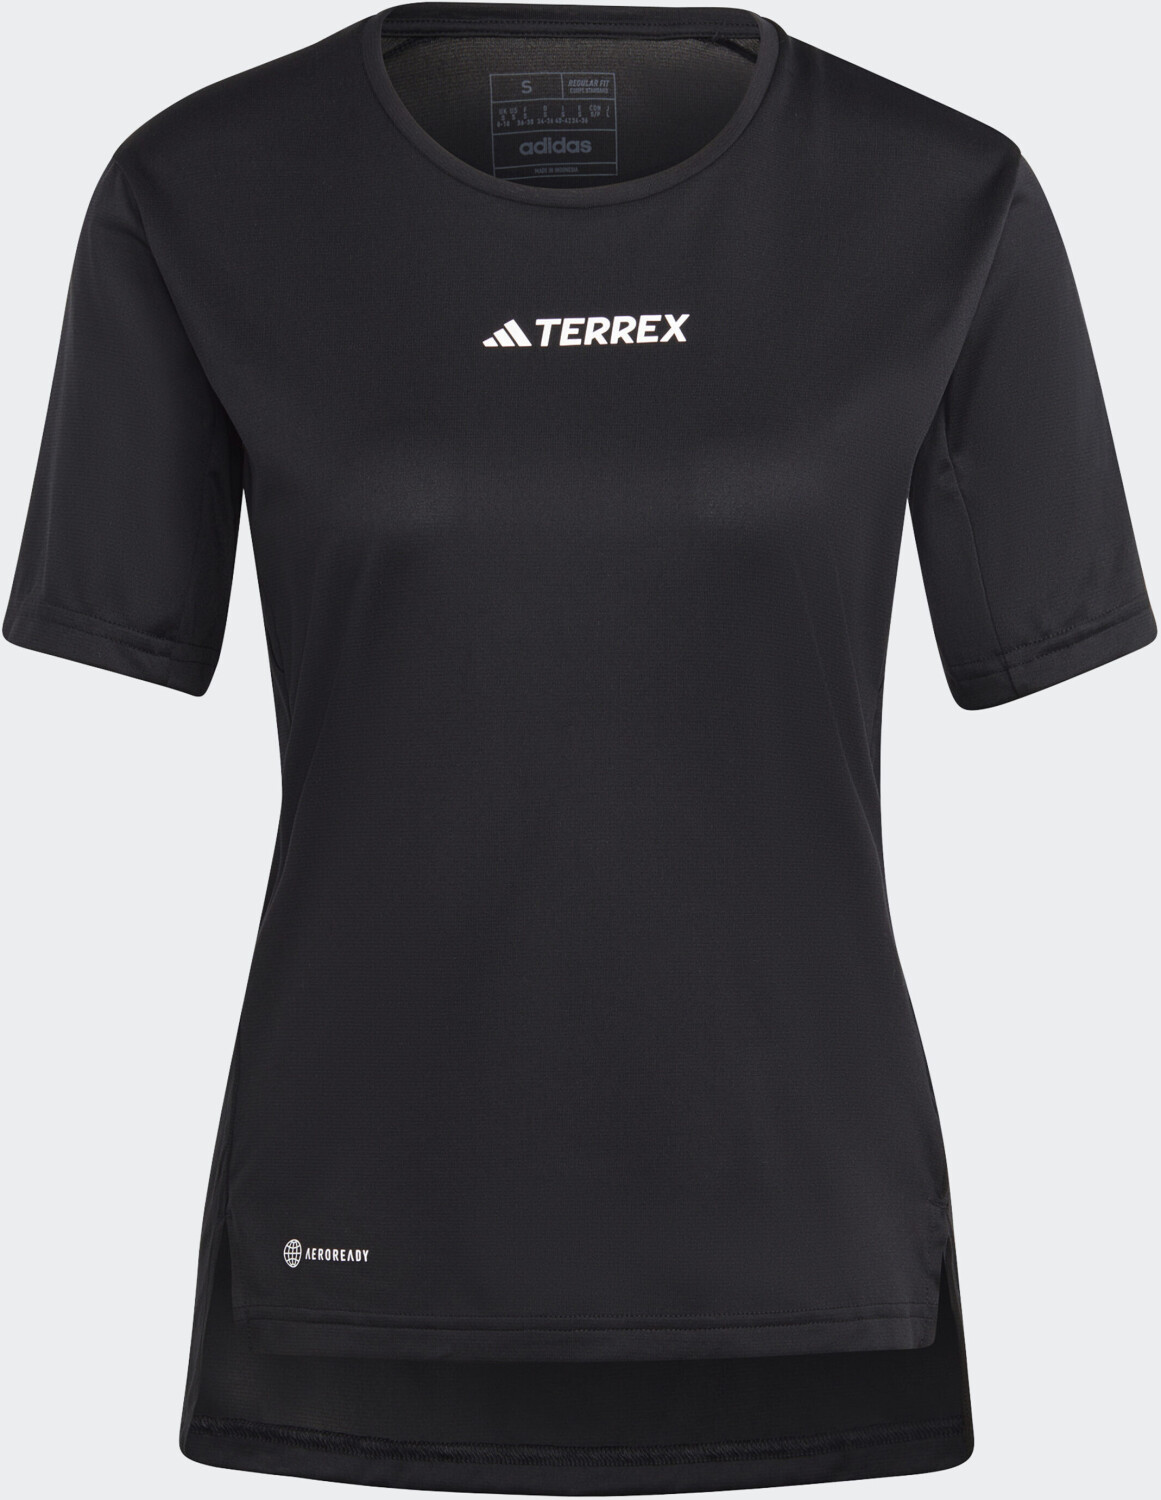 Adidas TERREX Multi T-Shirt ab (HM4041) € black Preisvergleich 25,99 bei 